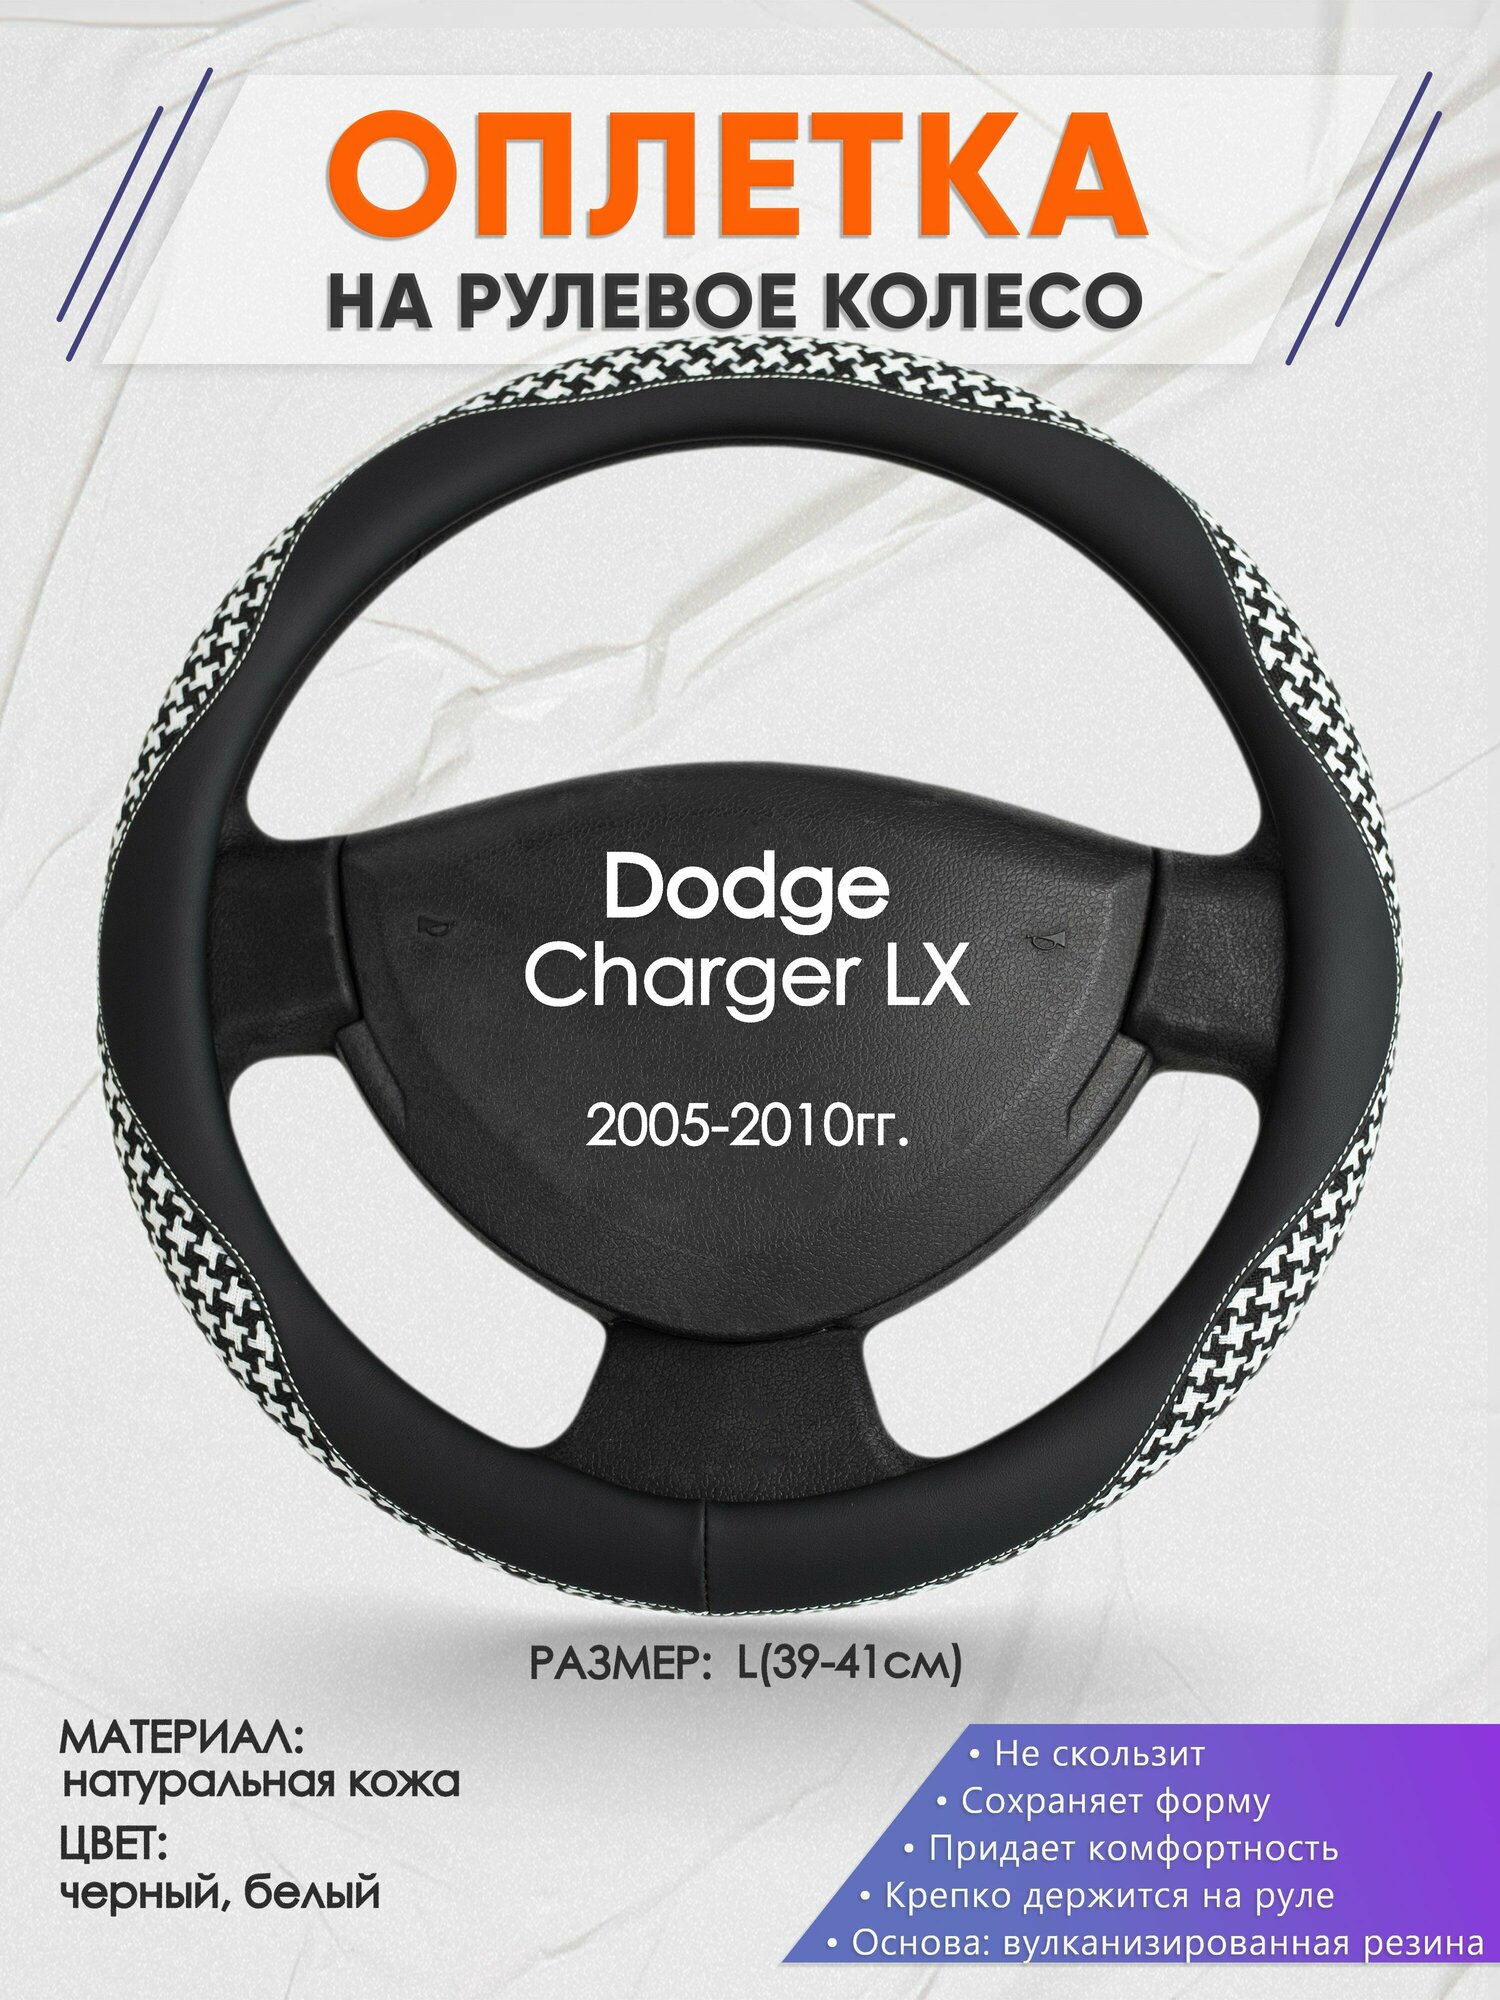 Оплетка на руль для Dodge Charger LX(Додж Чаргер) 2005-2010, L(39-41см), Натуральная кожа 21